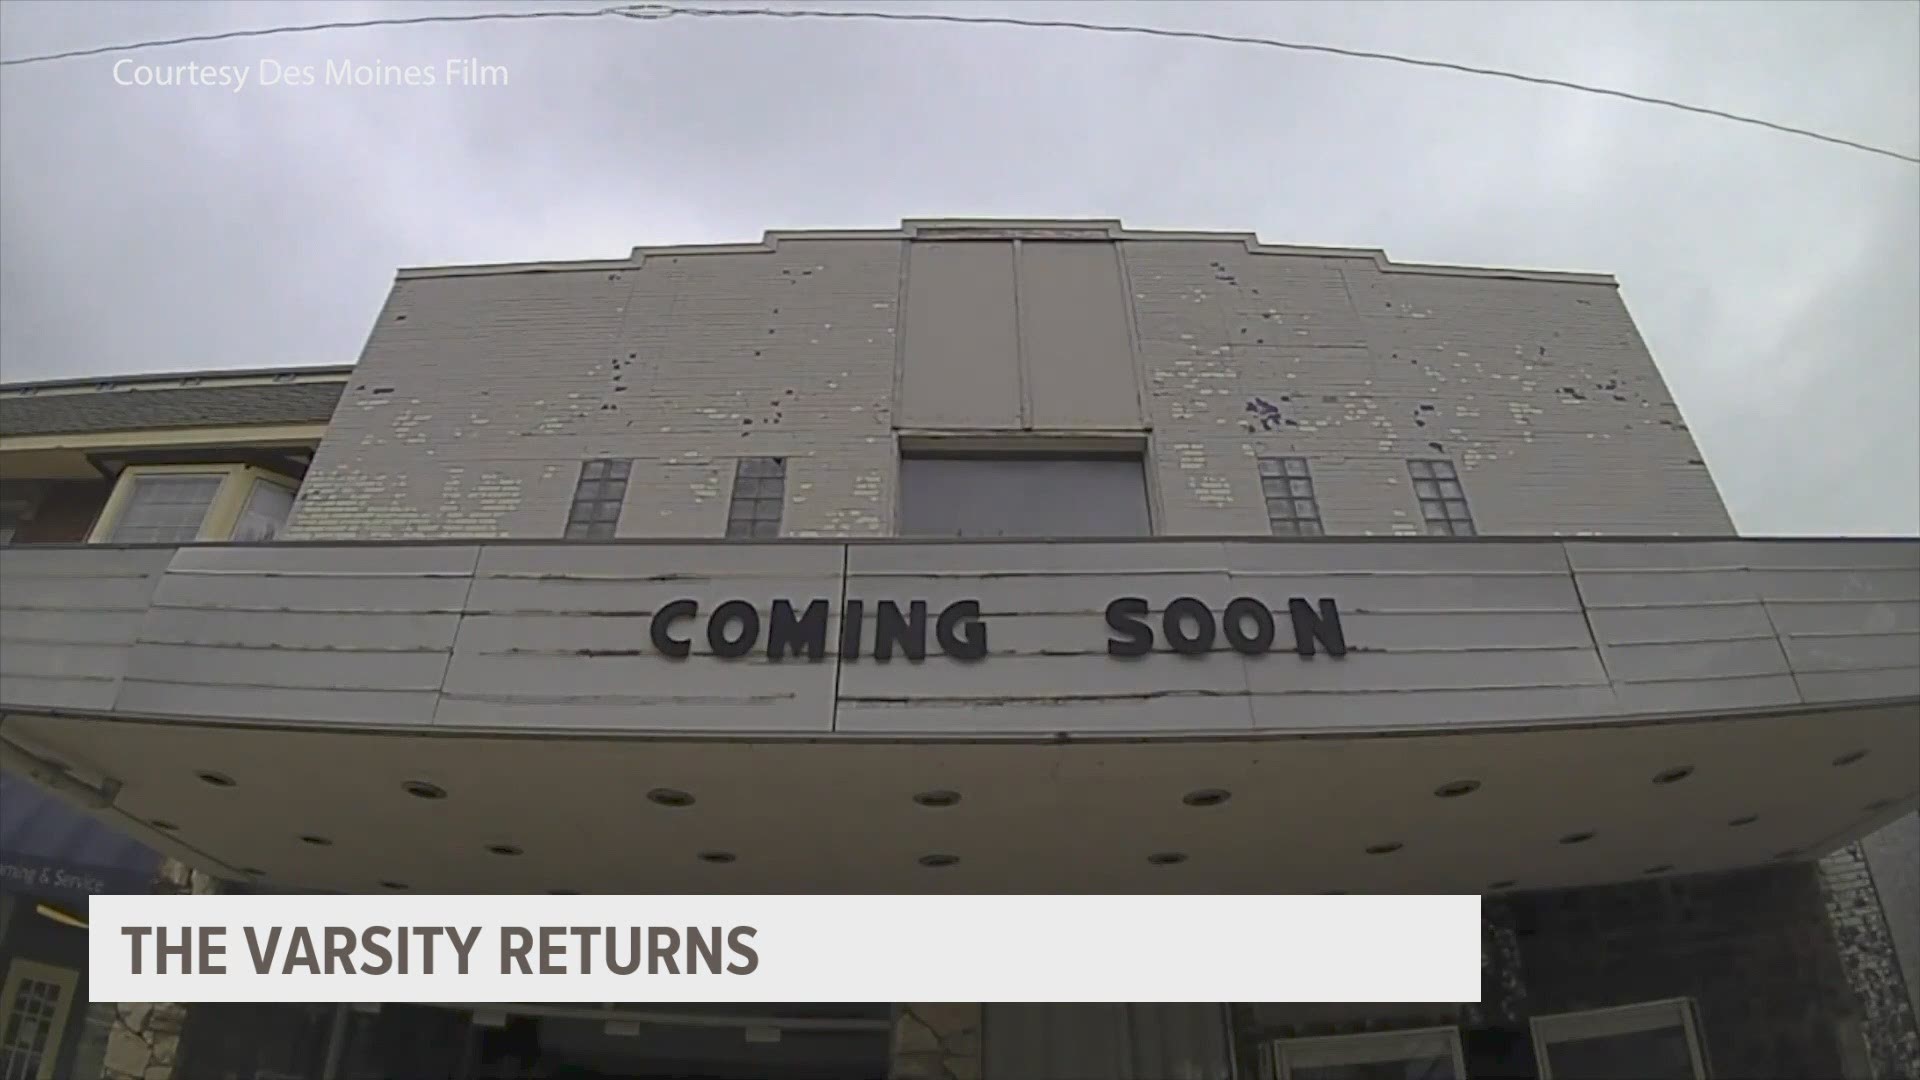 Des Moines film is planning a $3 million renovation.